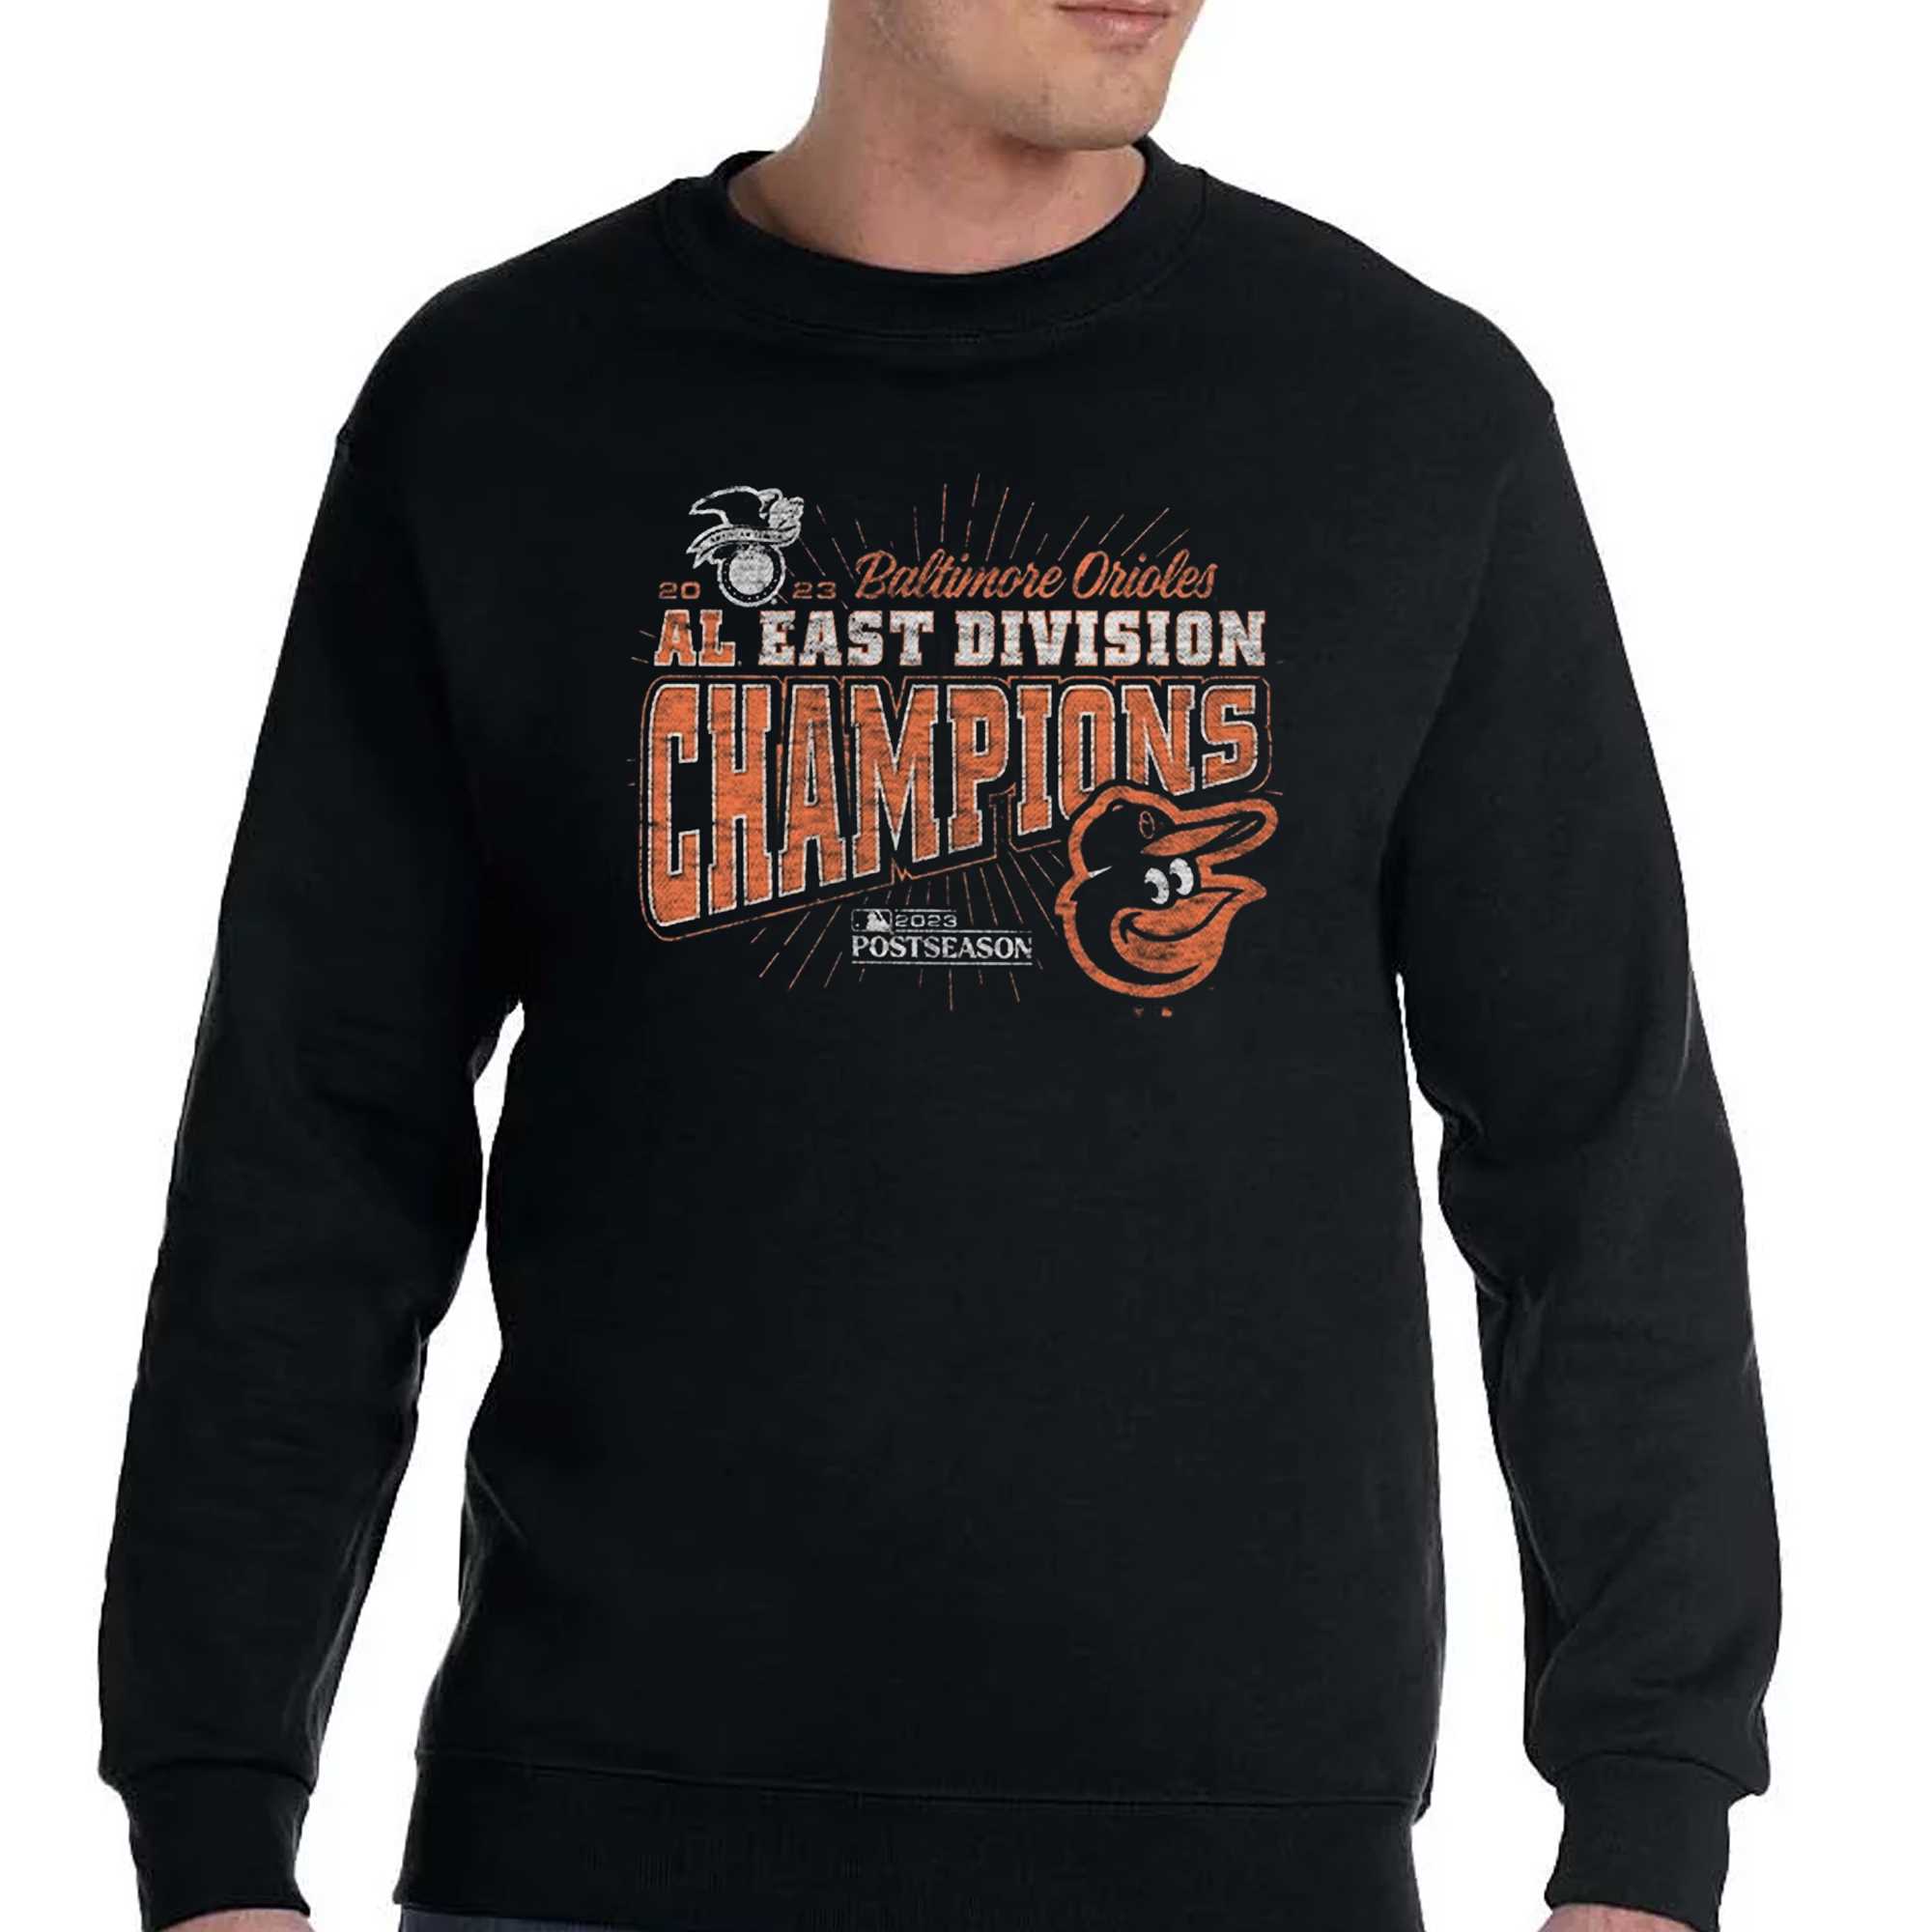 Baltimore orioles 2023 al east Division champions baltimore orioles shirt,  hoodie, longsleeve, sweatshirt, v-neck tee